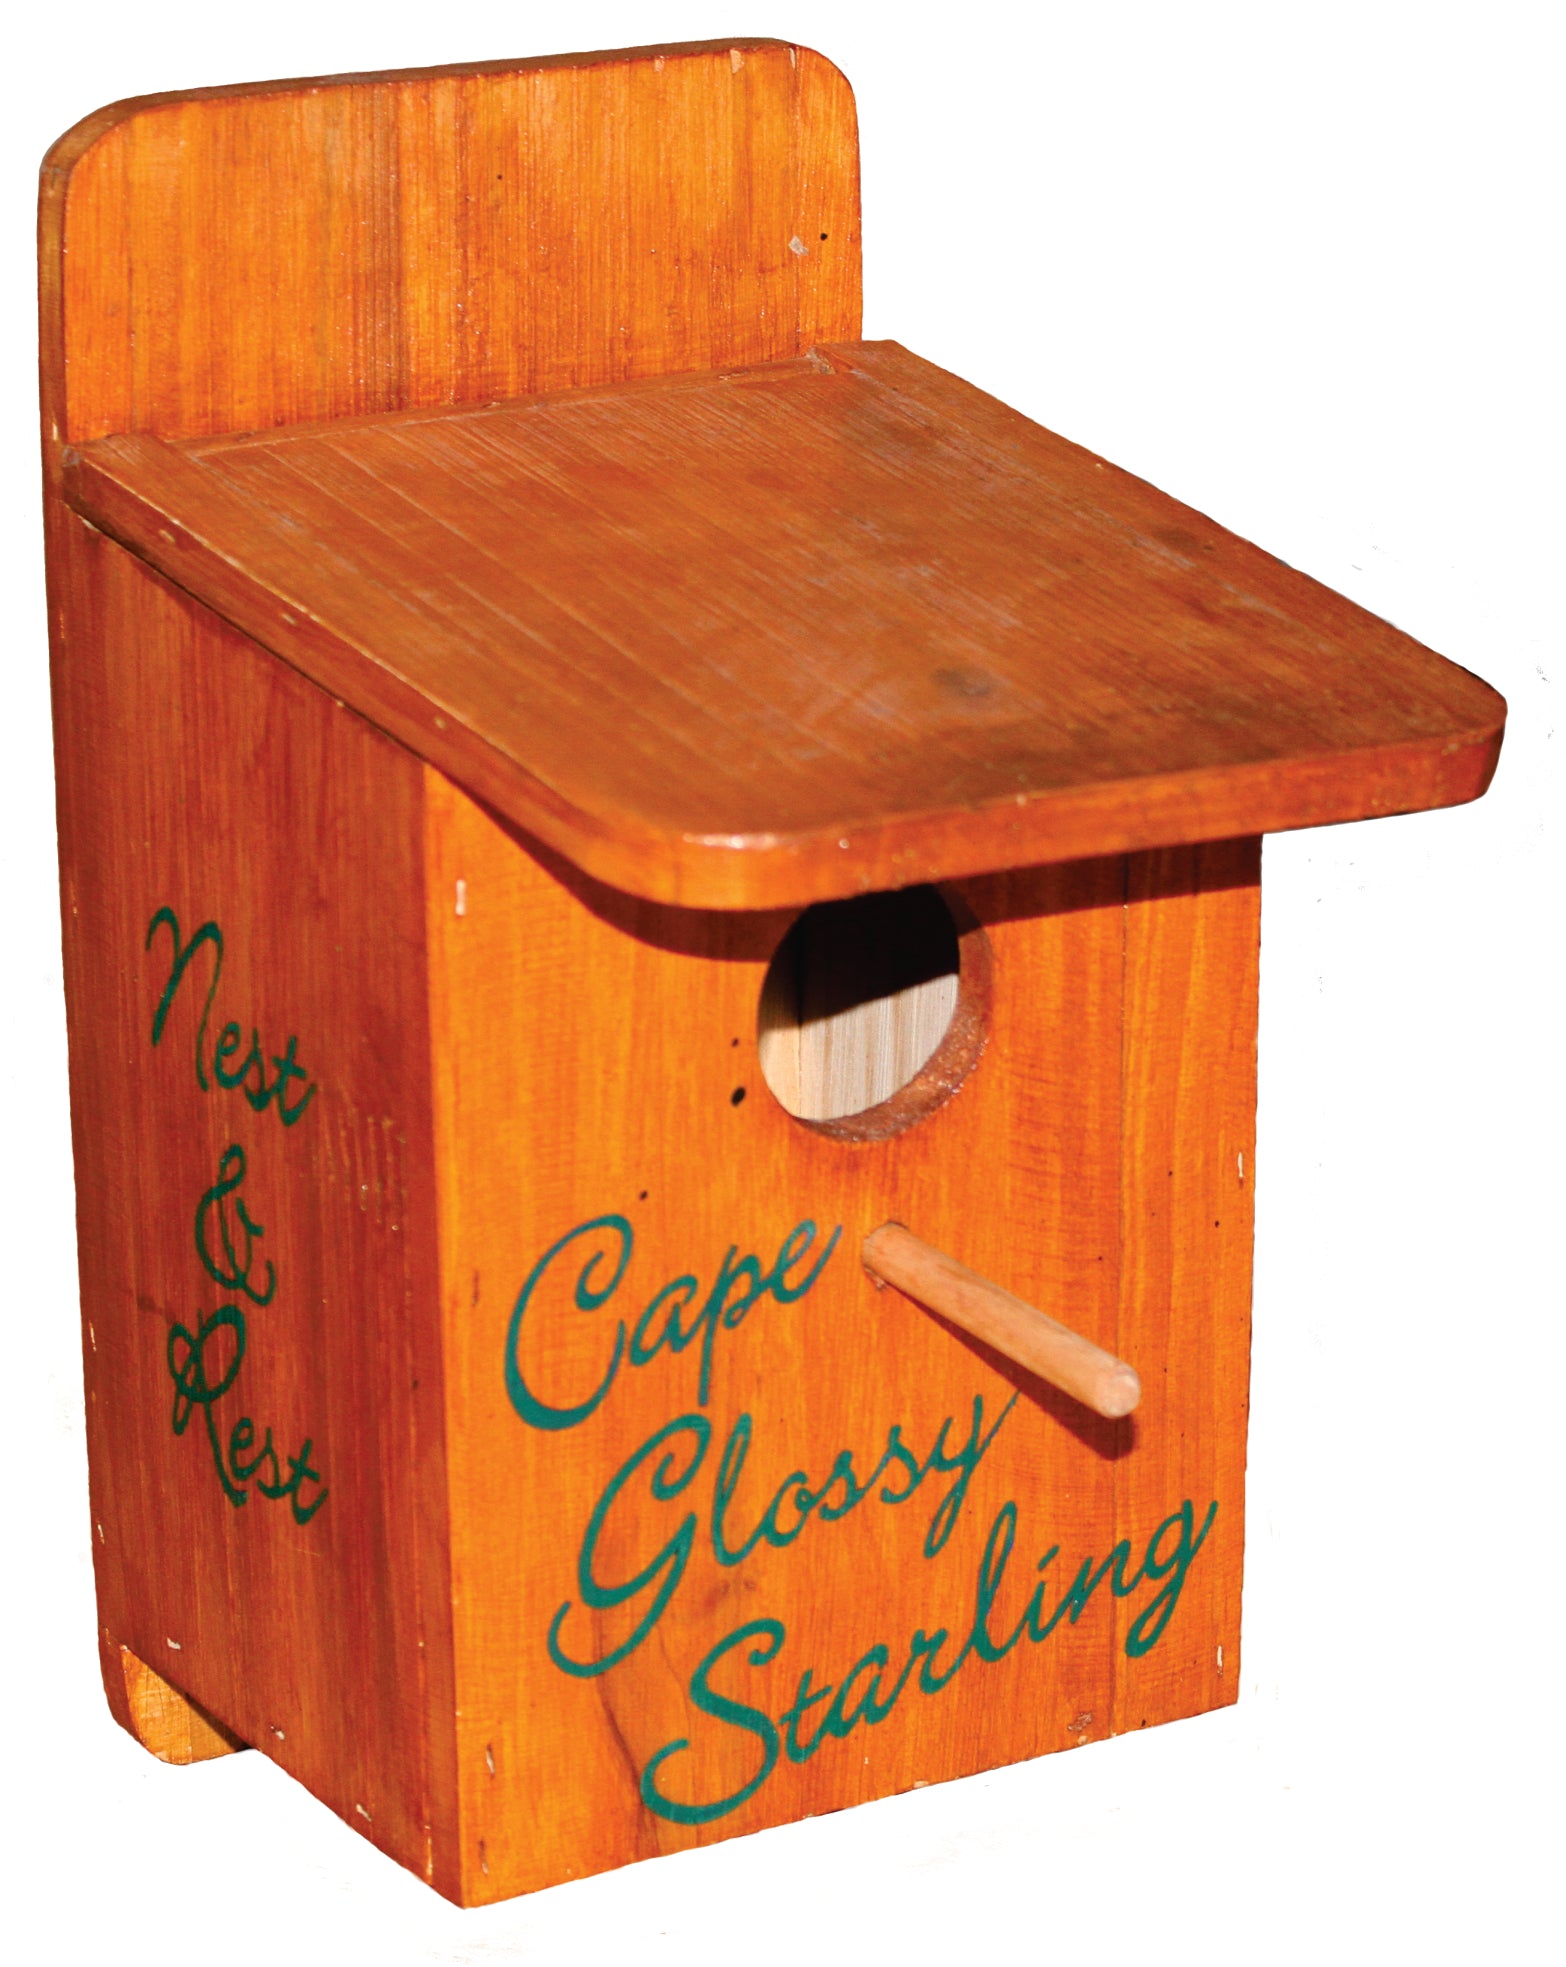 Elaine's Birding Cape Glossy Starling Nest Box